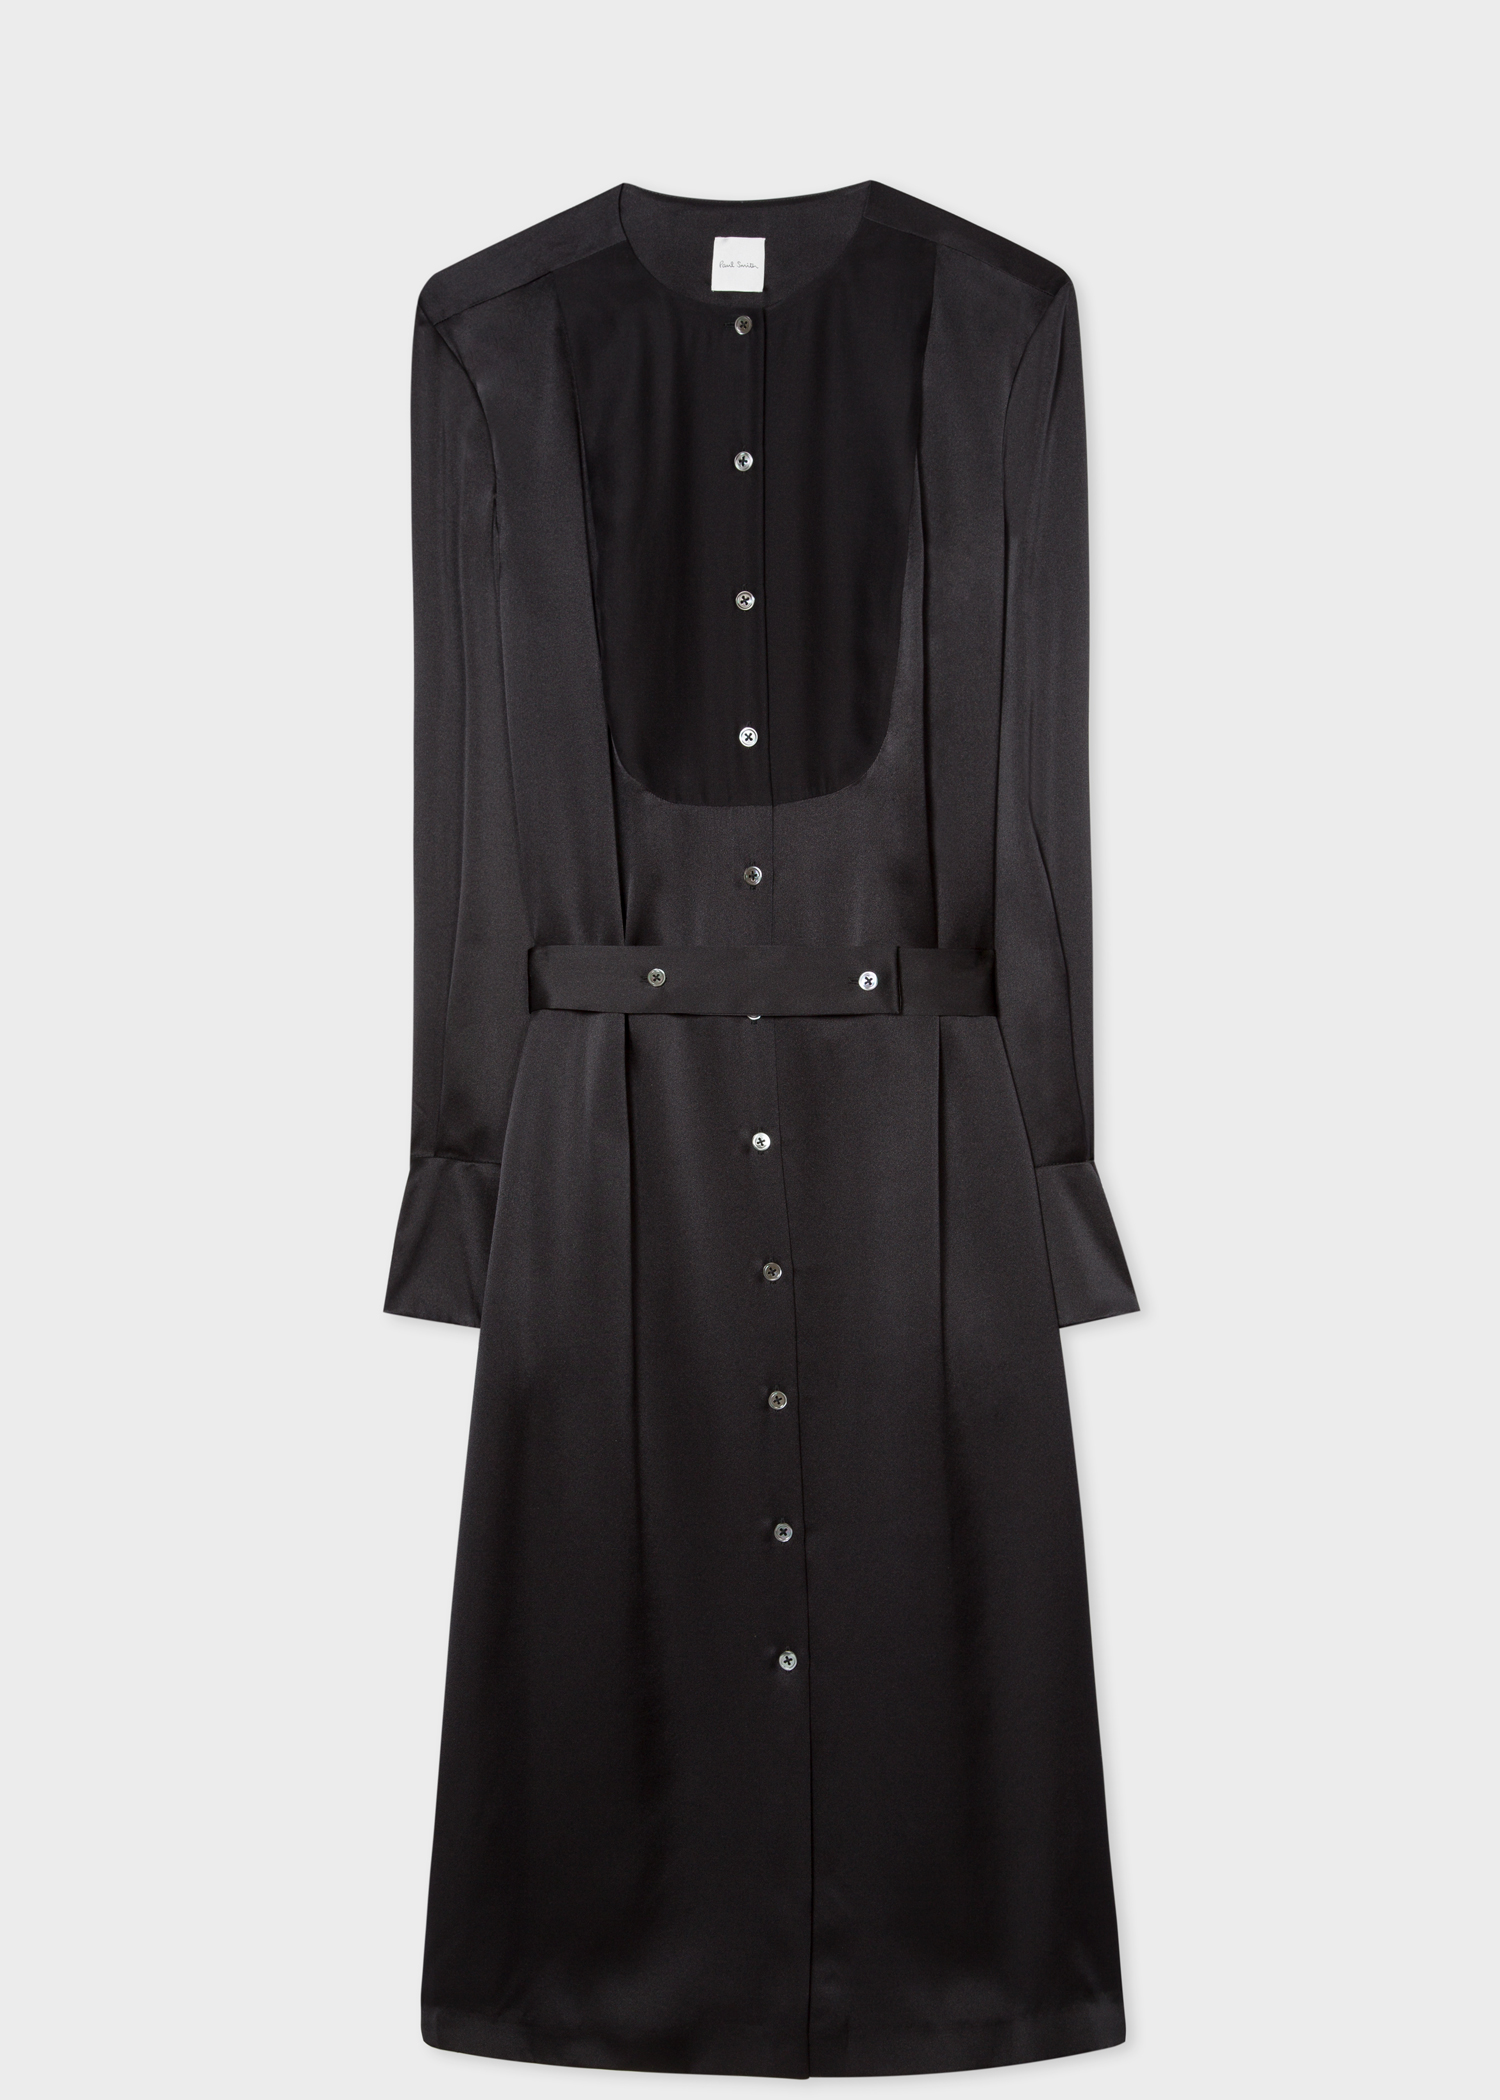 Front view - Women's Black Tuxedo Satin Silk Shirt Dress With Bib And Belt Detail Paul Smith